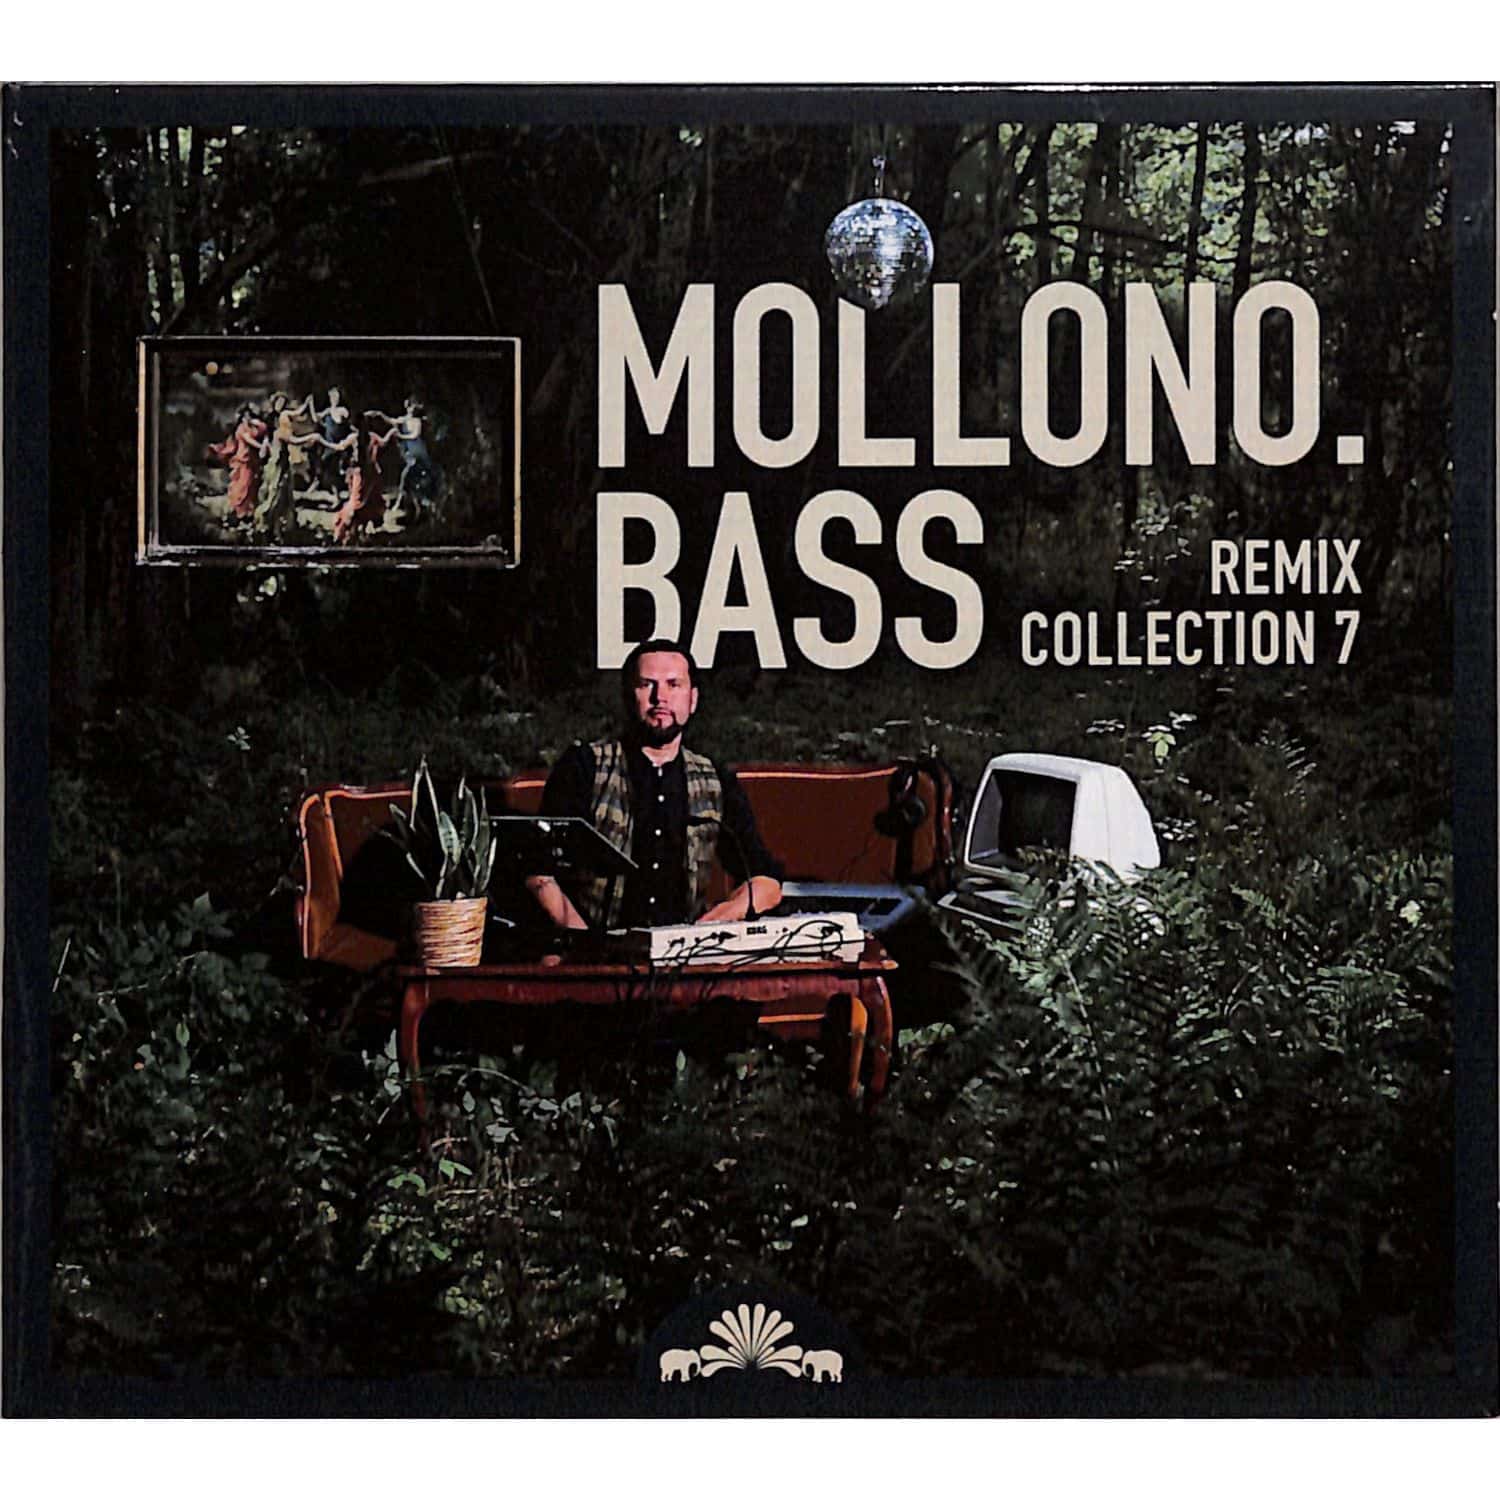 Mollono.Bass - MOLLONO.BASS REMIX COLLECTION 7 